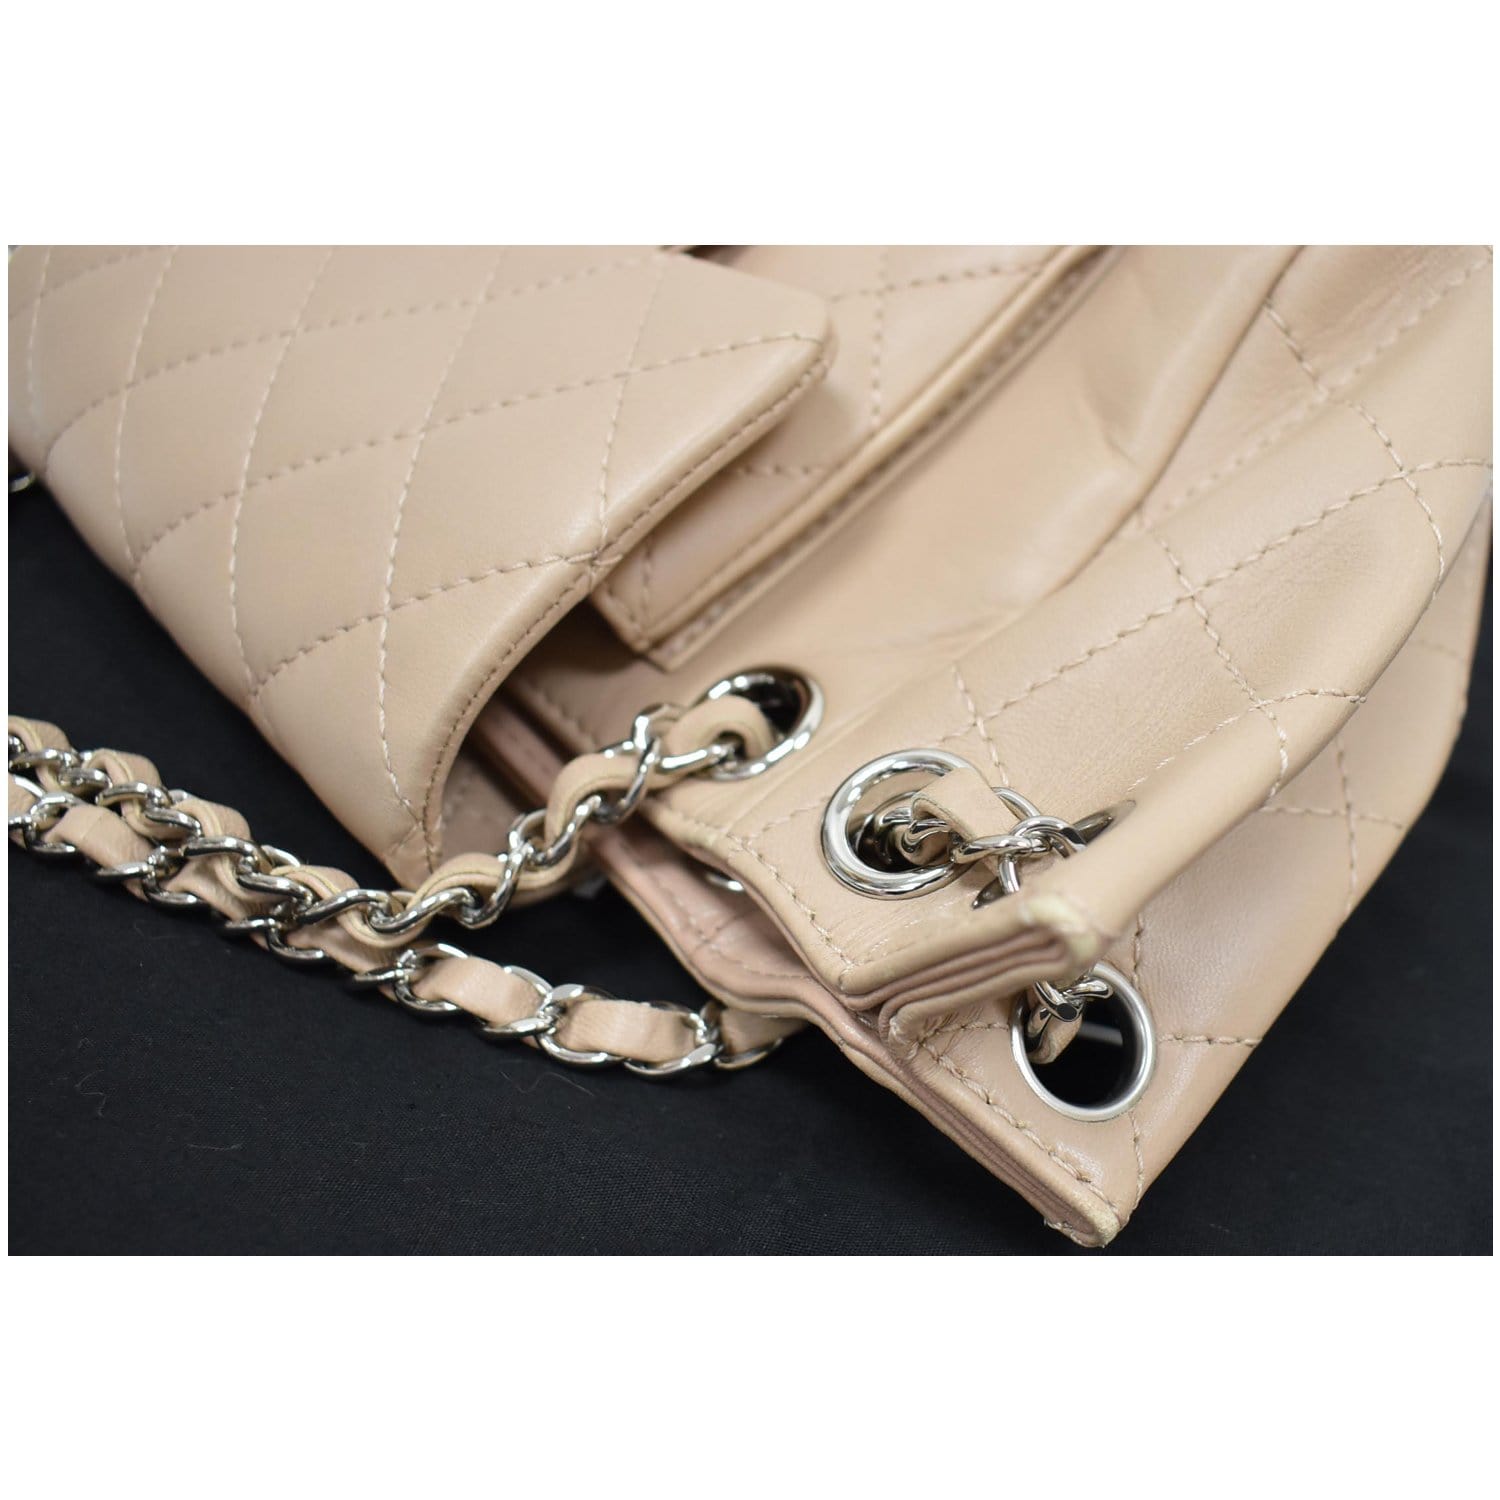 Chanel CC Accordion Lambskin Leather Shoulder Bag